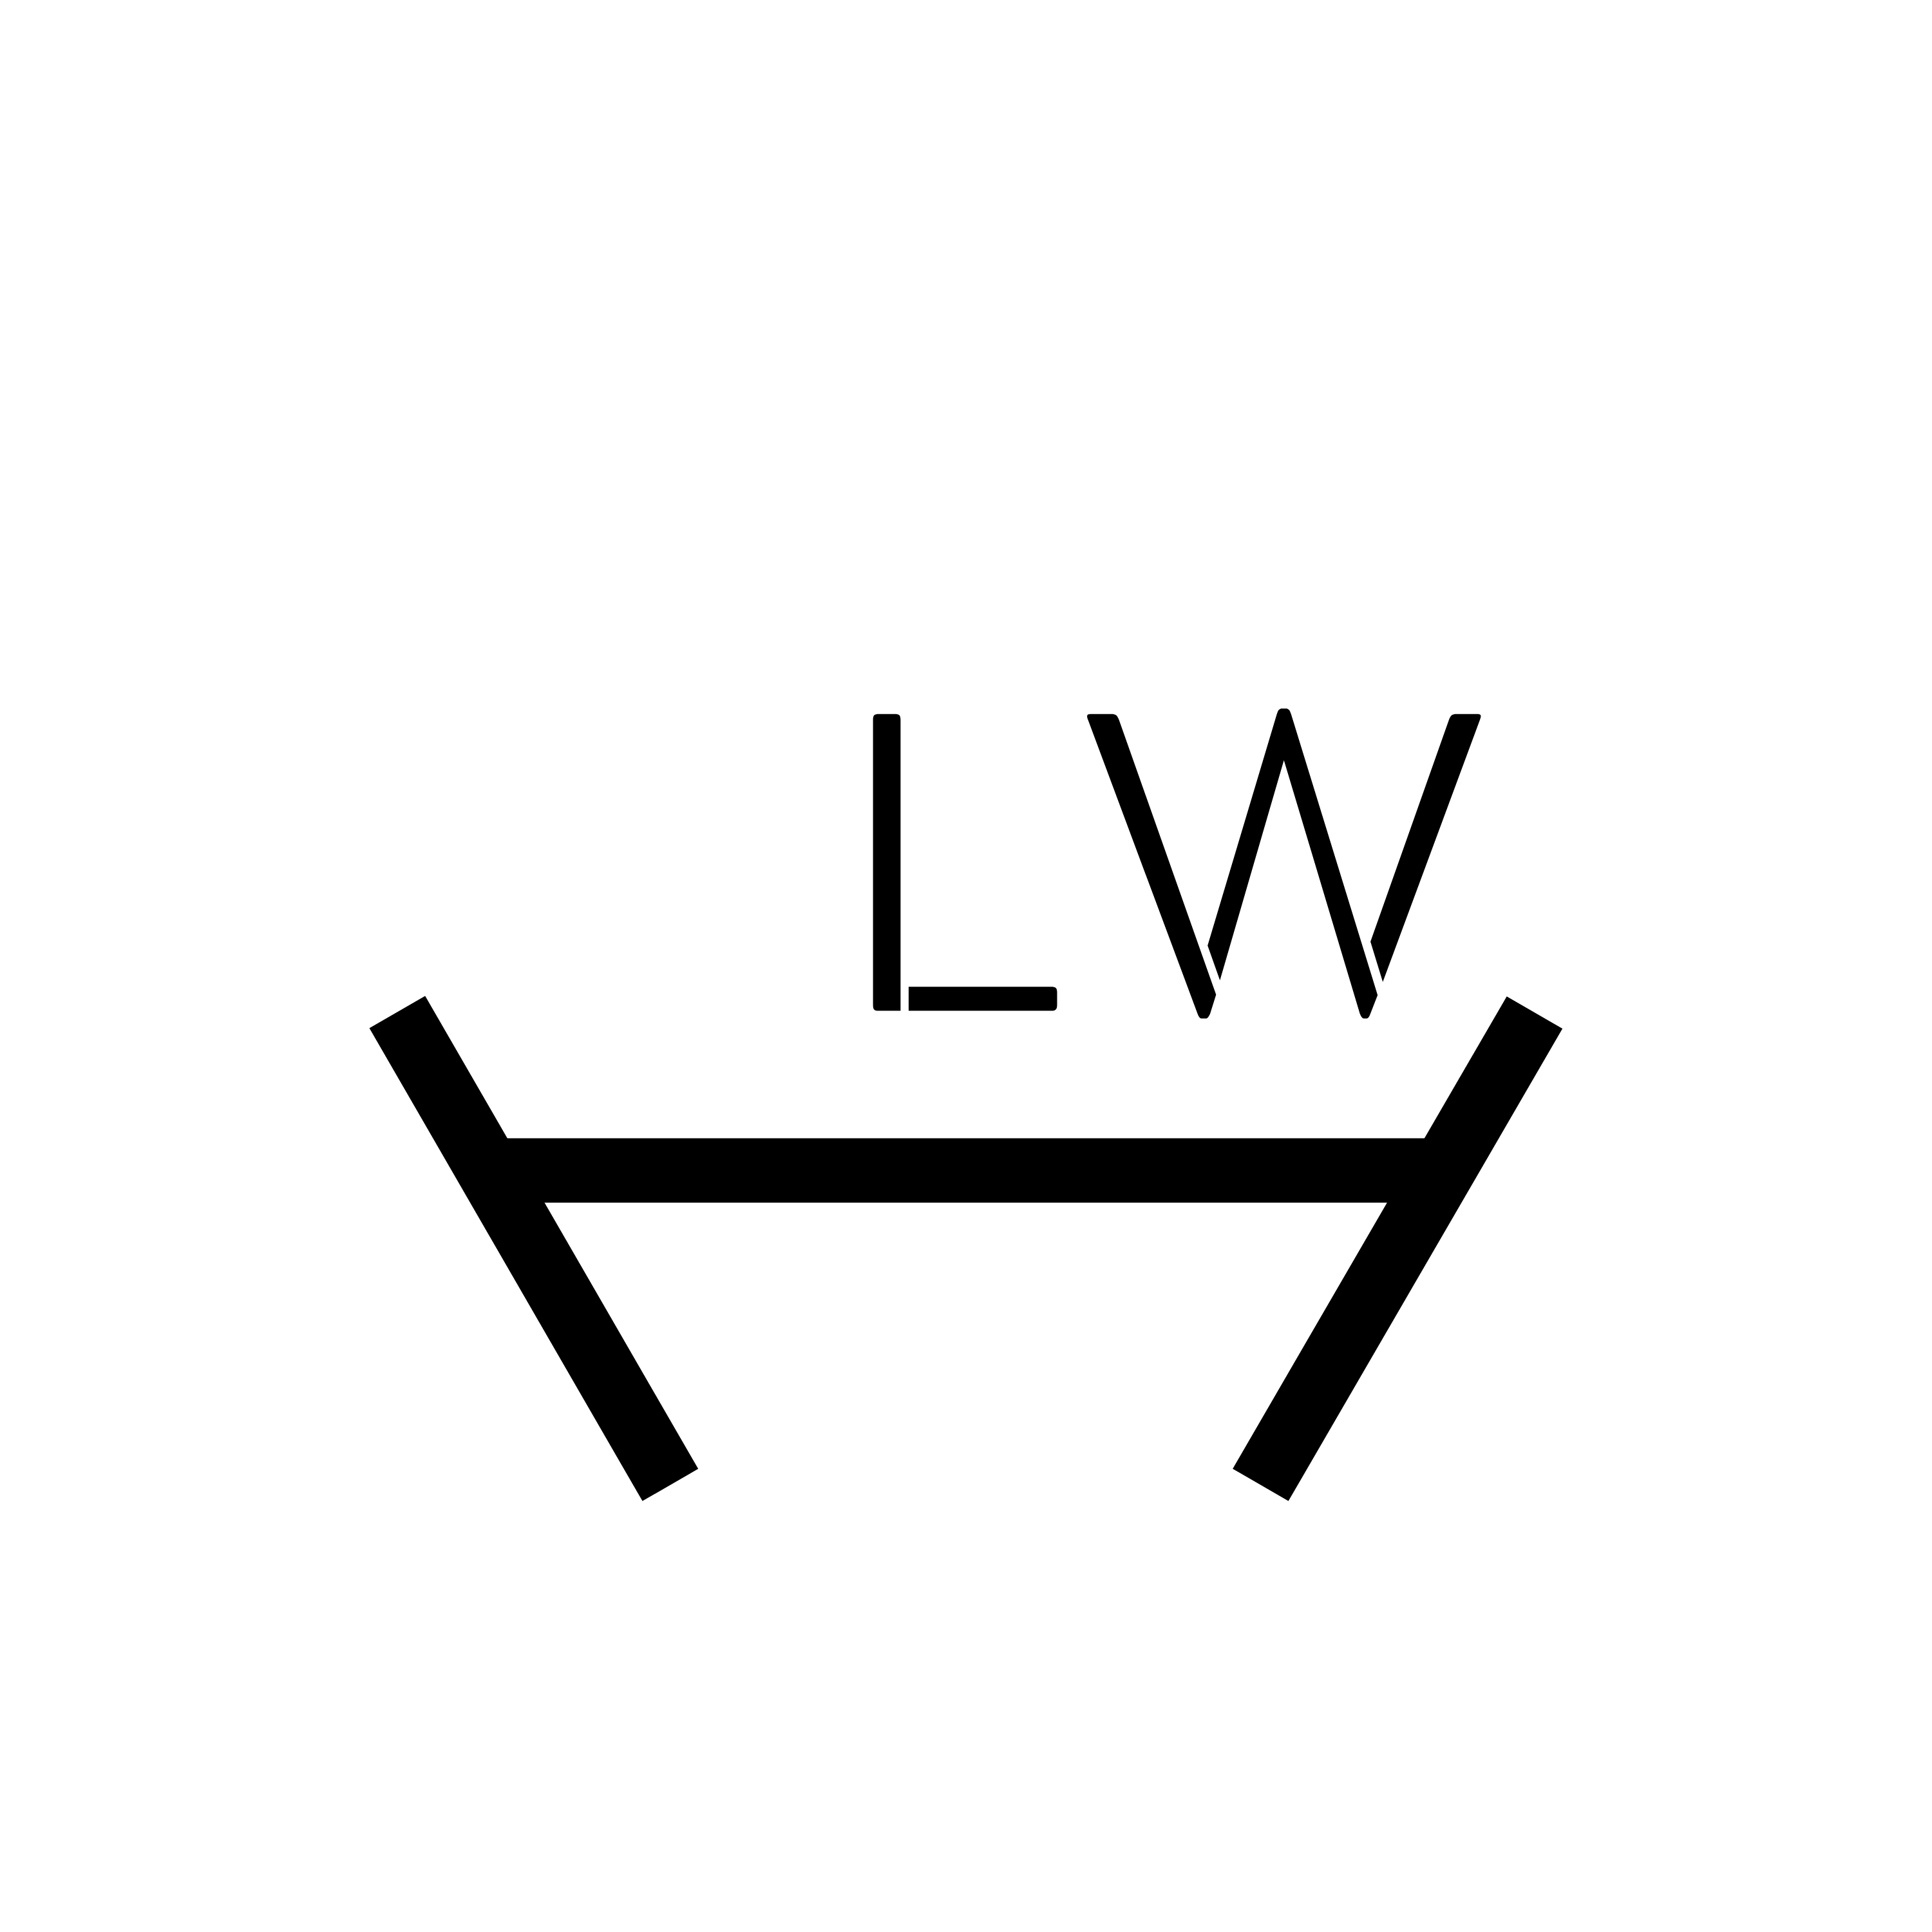 Like water